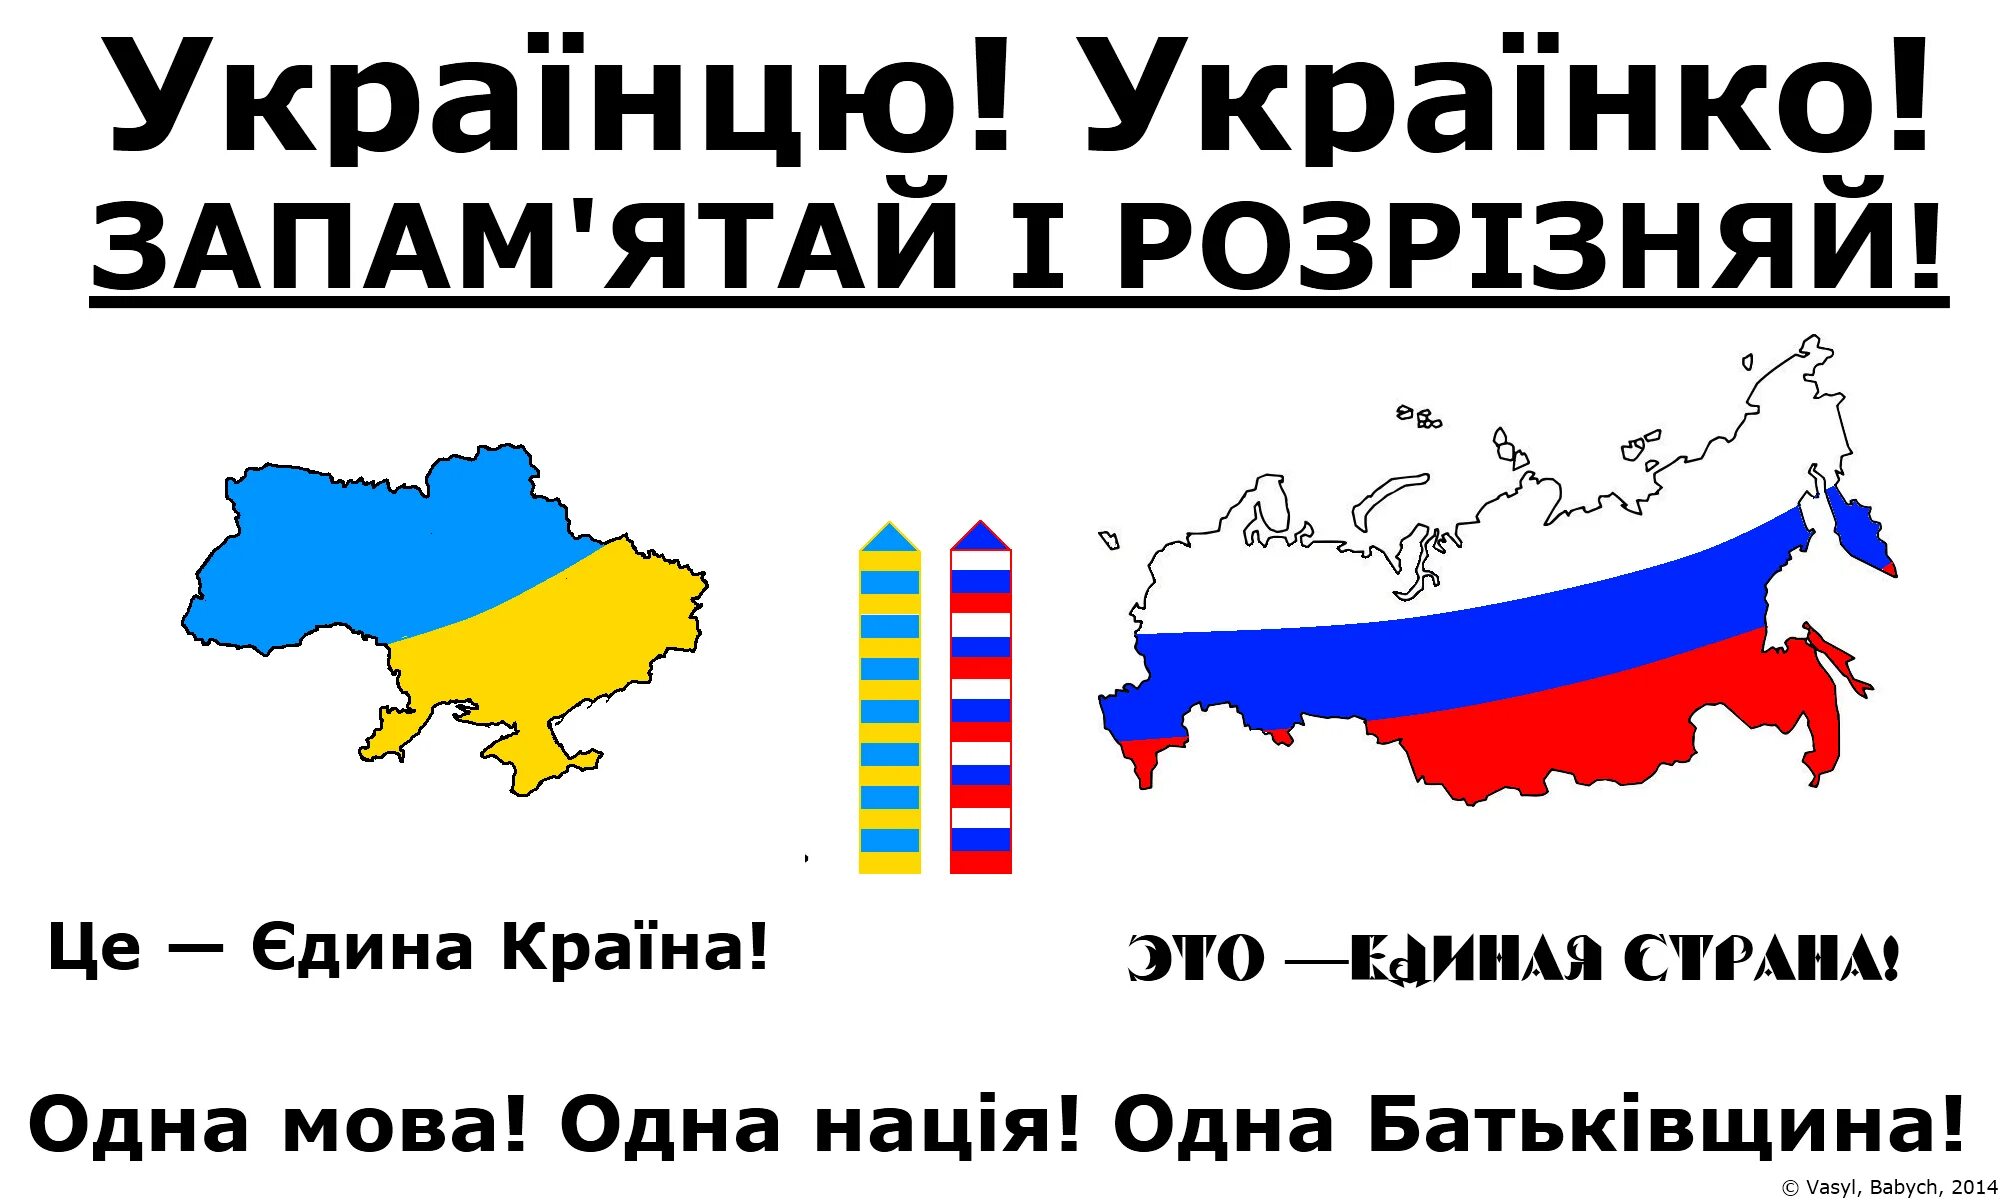 Країна буде. Одна мова одна нация. Украина мова. Украина одна мова. Одна Страна одна нация одна мова.